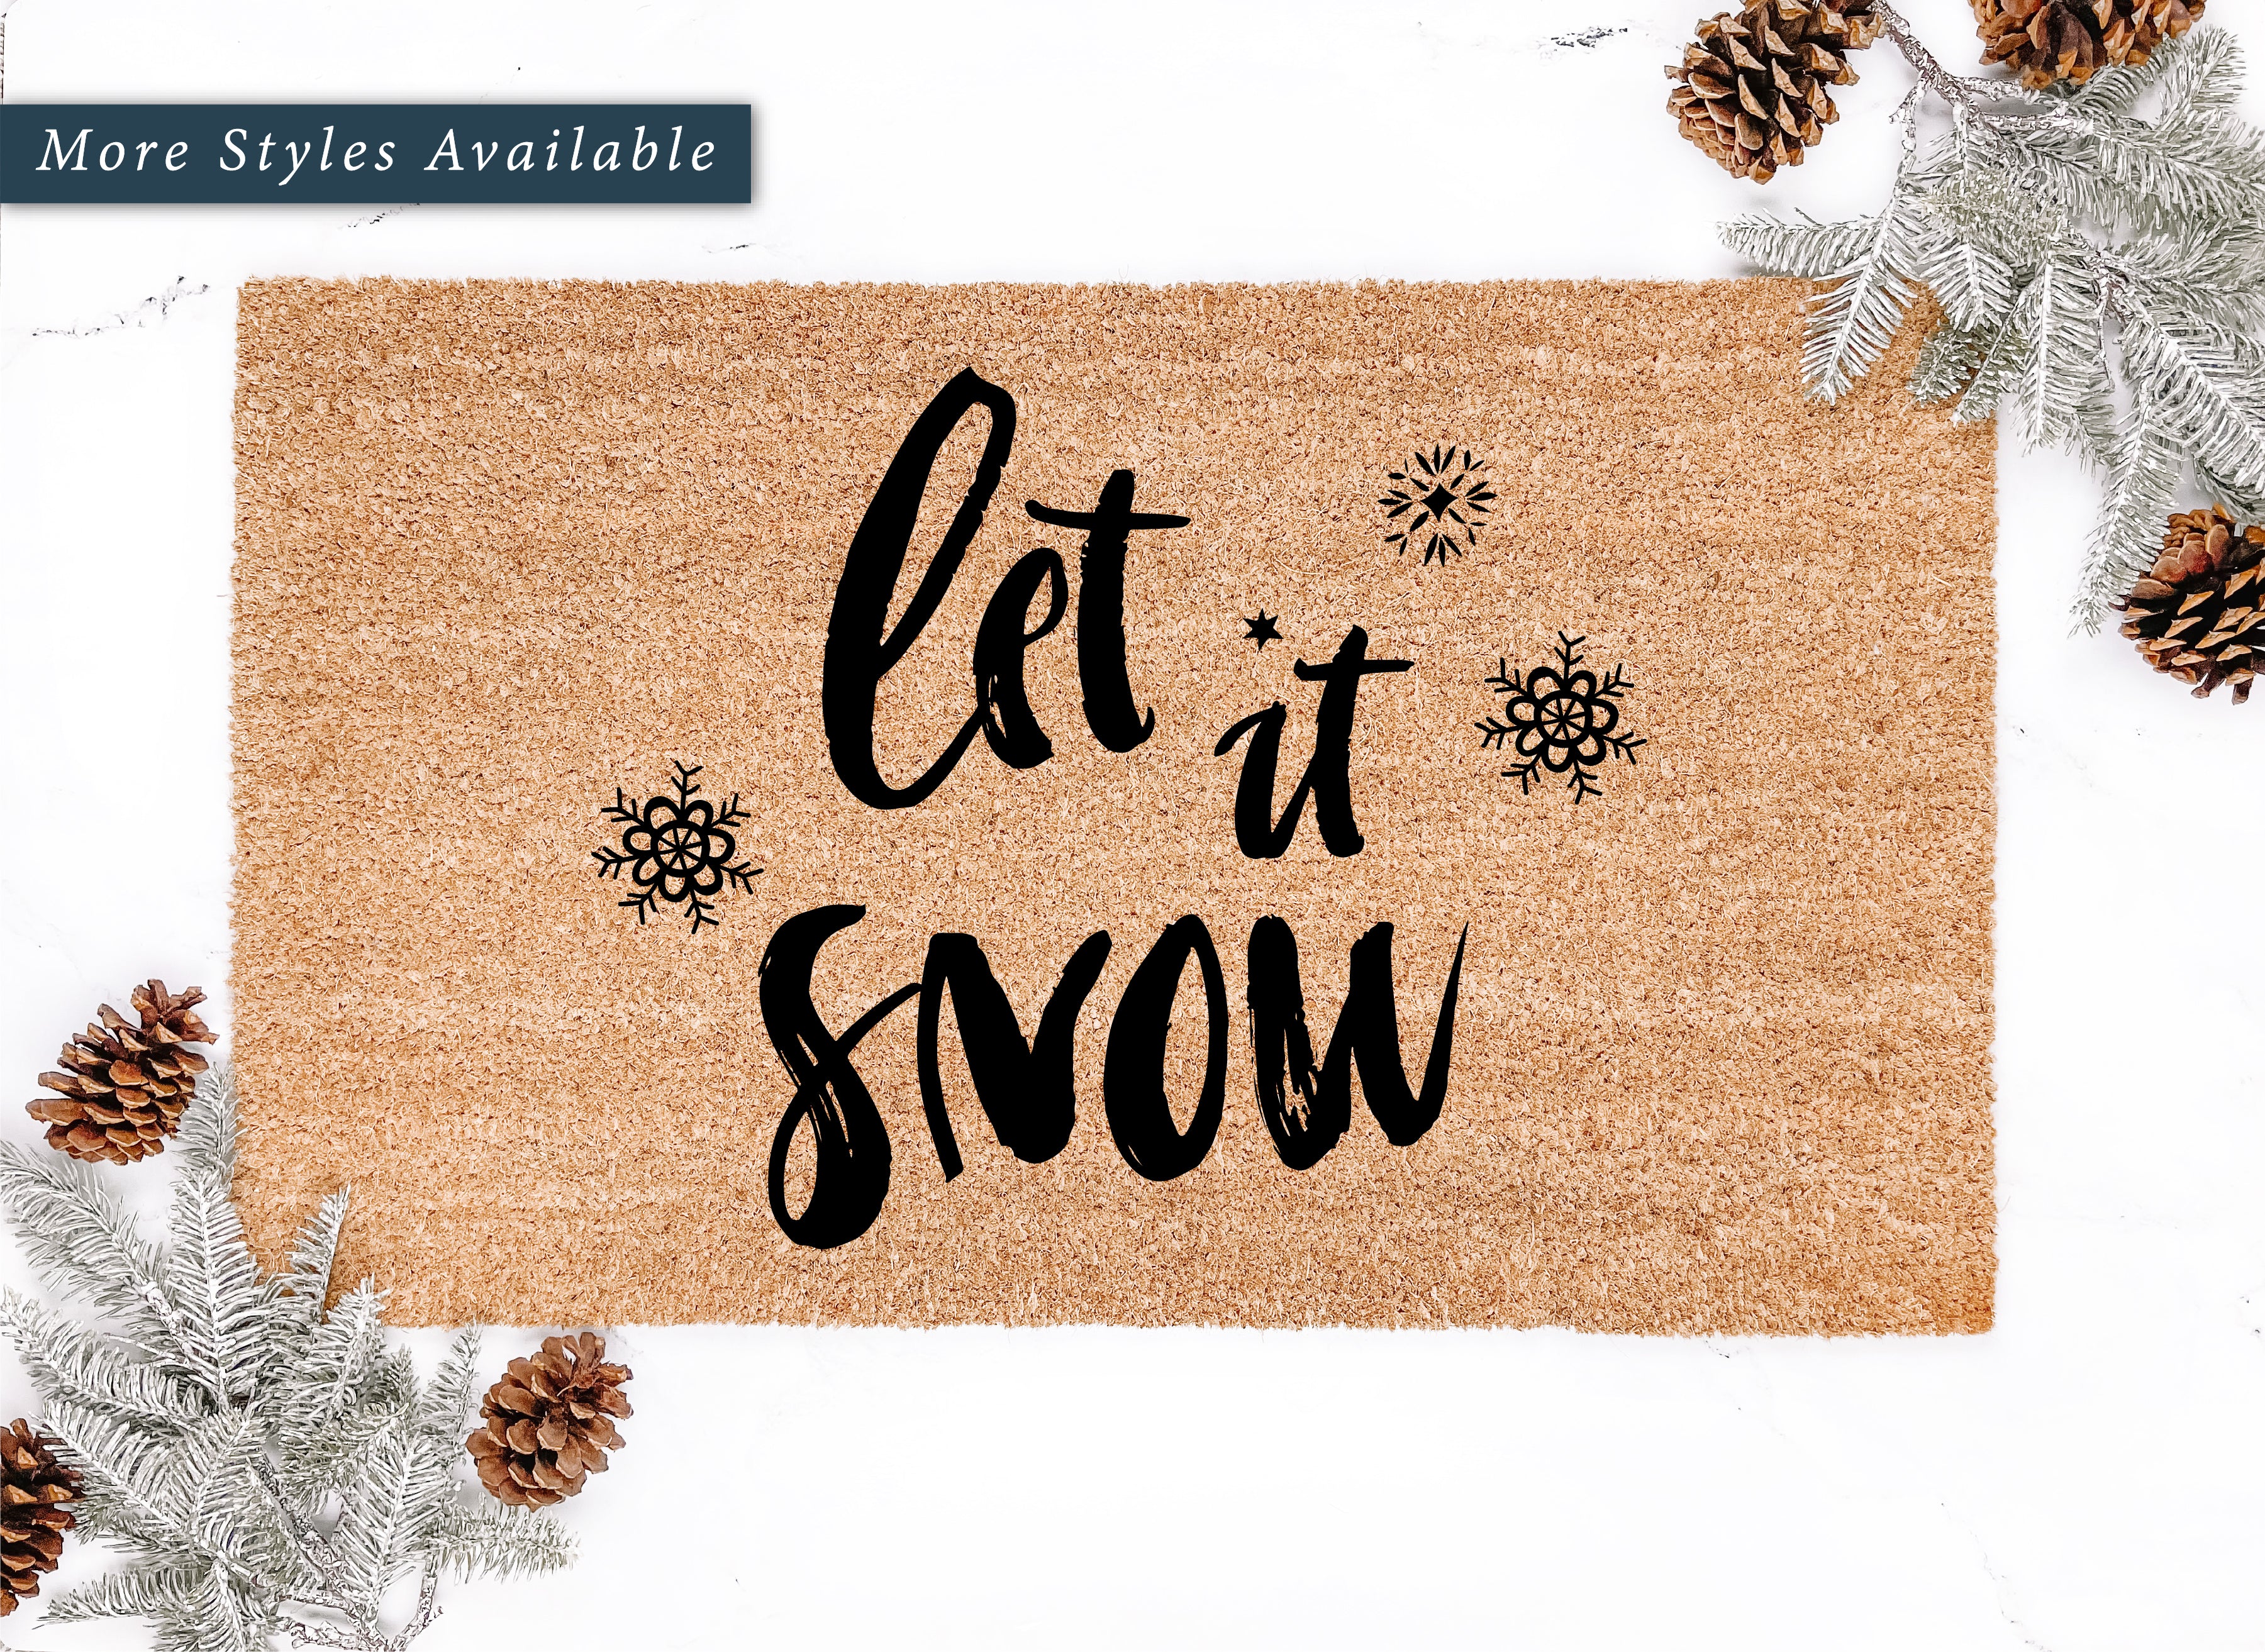 Let It Snow (Snowflakes) Doormat